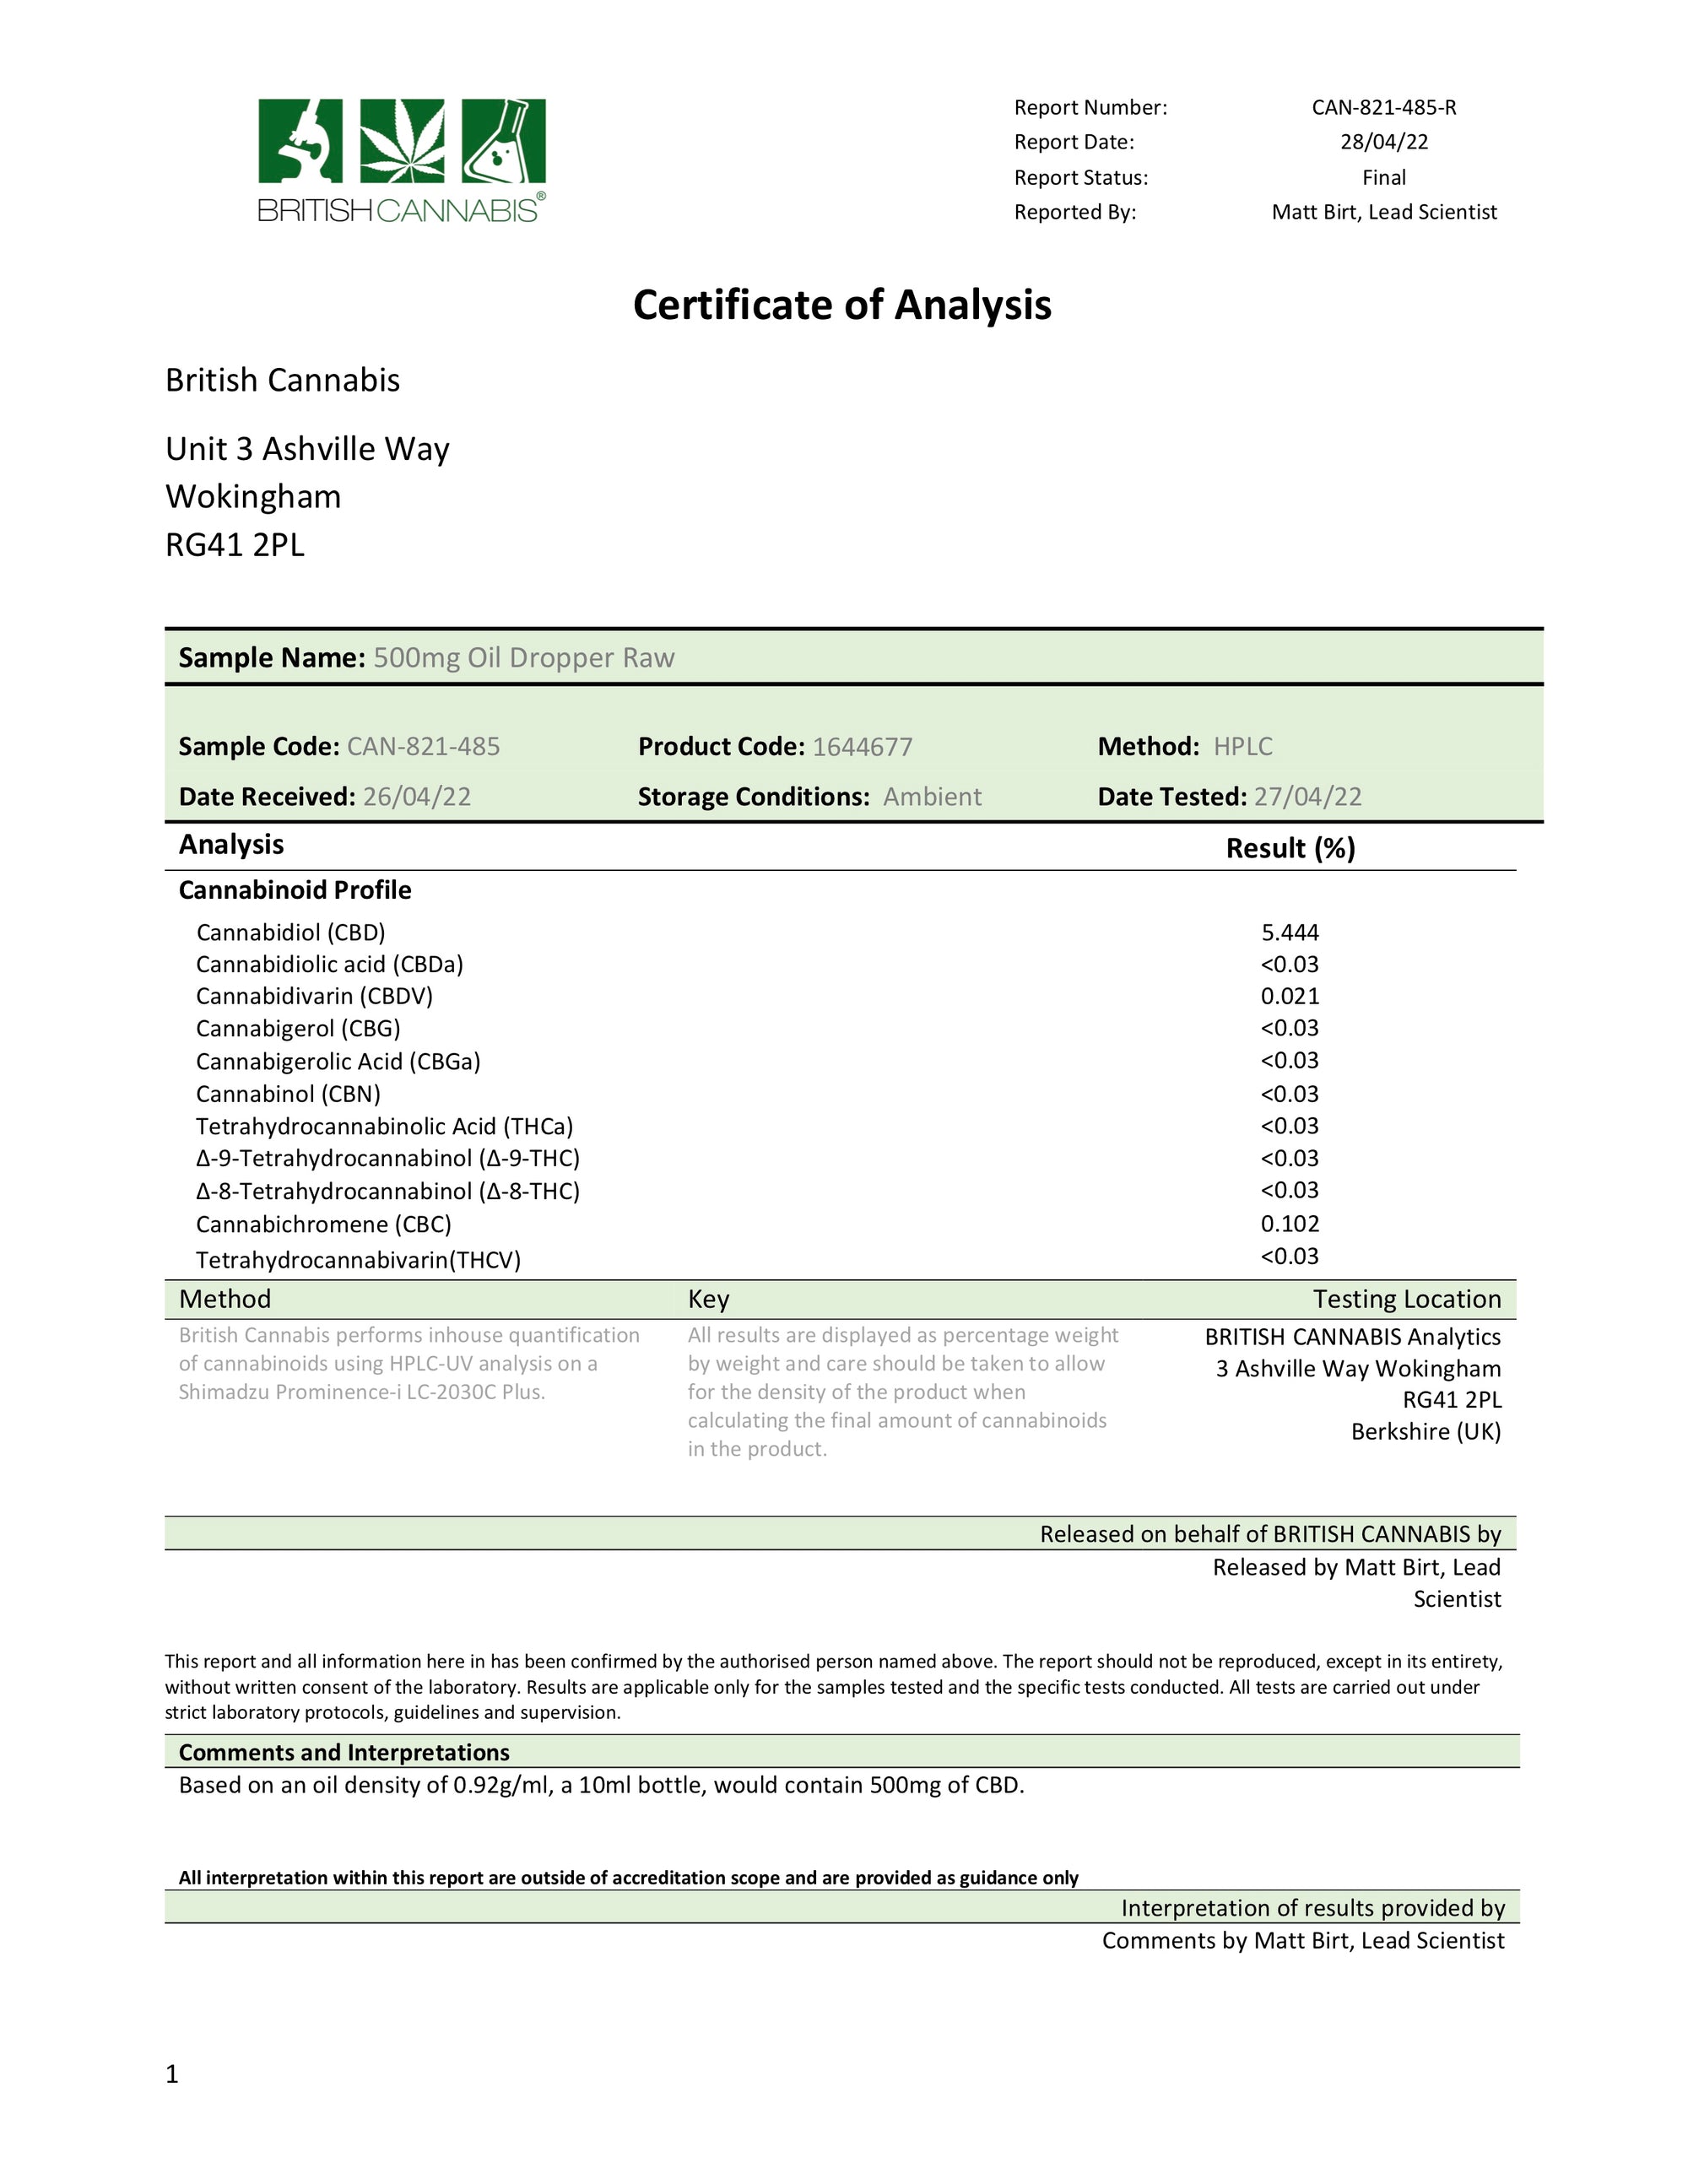 Pharmacy grade high quality CBD oil certificate of analysis